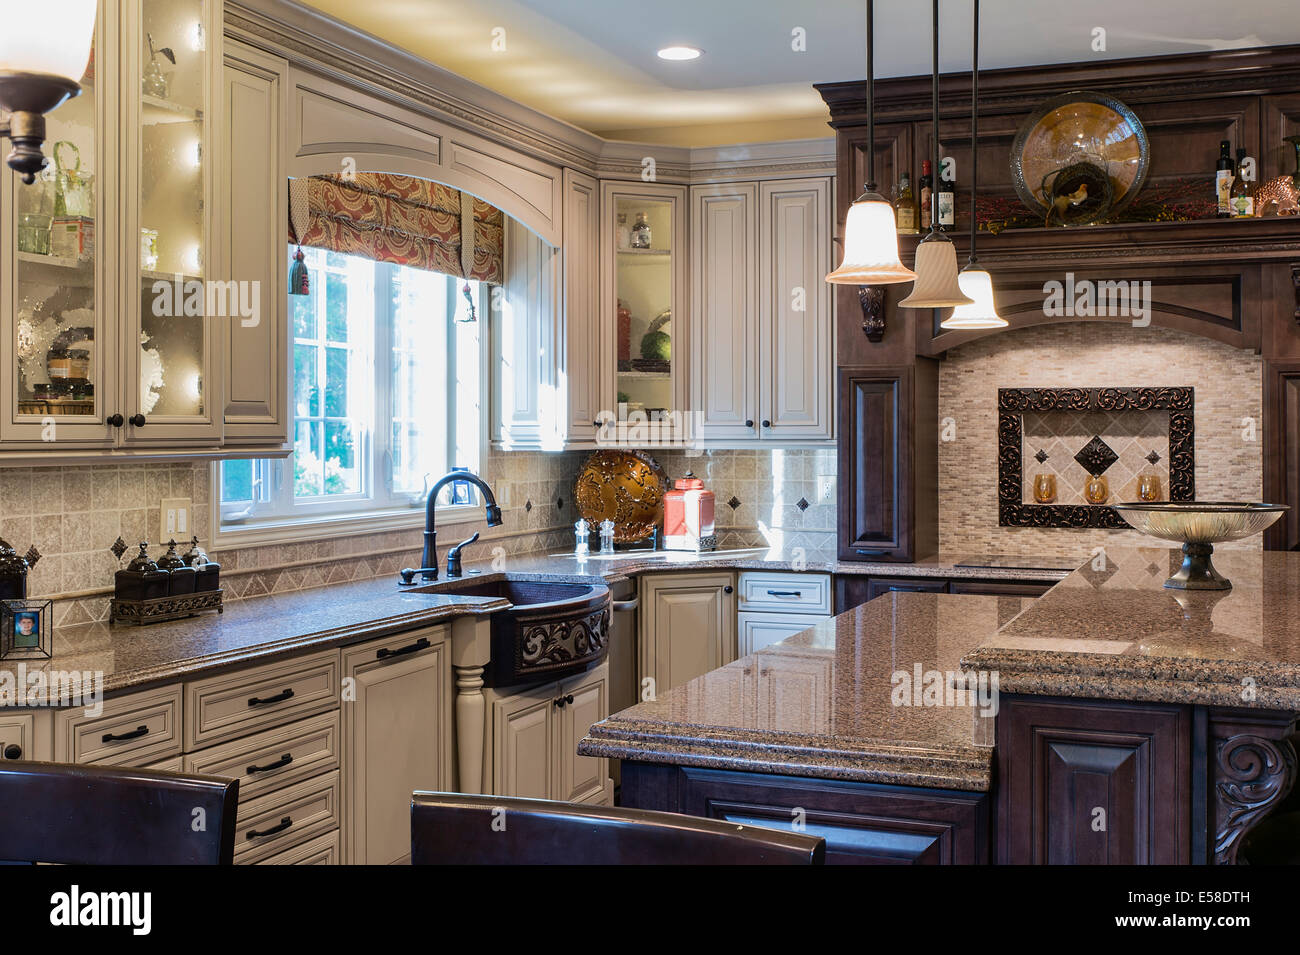 Upscale kitchen interior design. Stock Photo